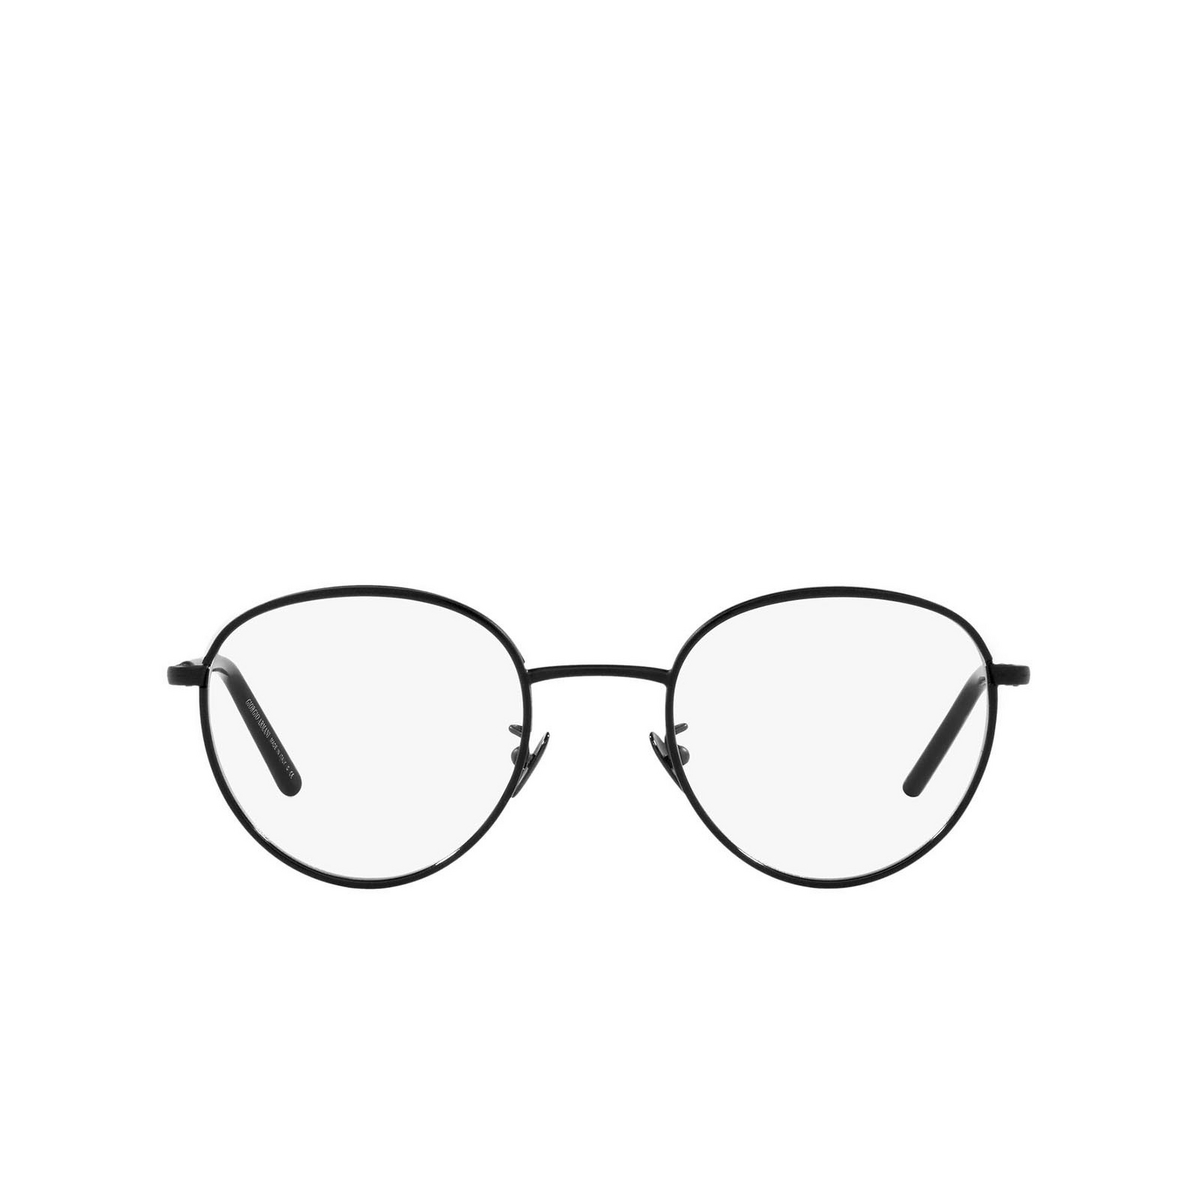 Giorgio Armani® Round Eyeglasses: AR5111J color Shiny/matte Black 3001 - front view.